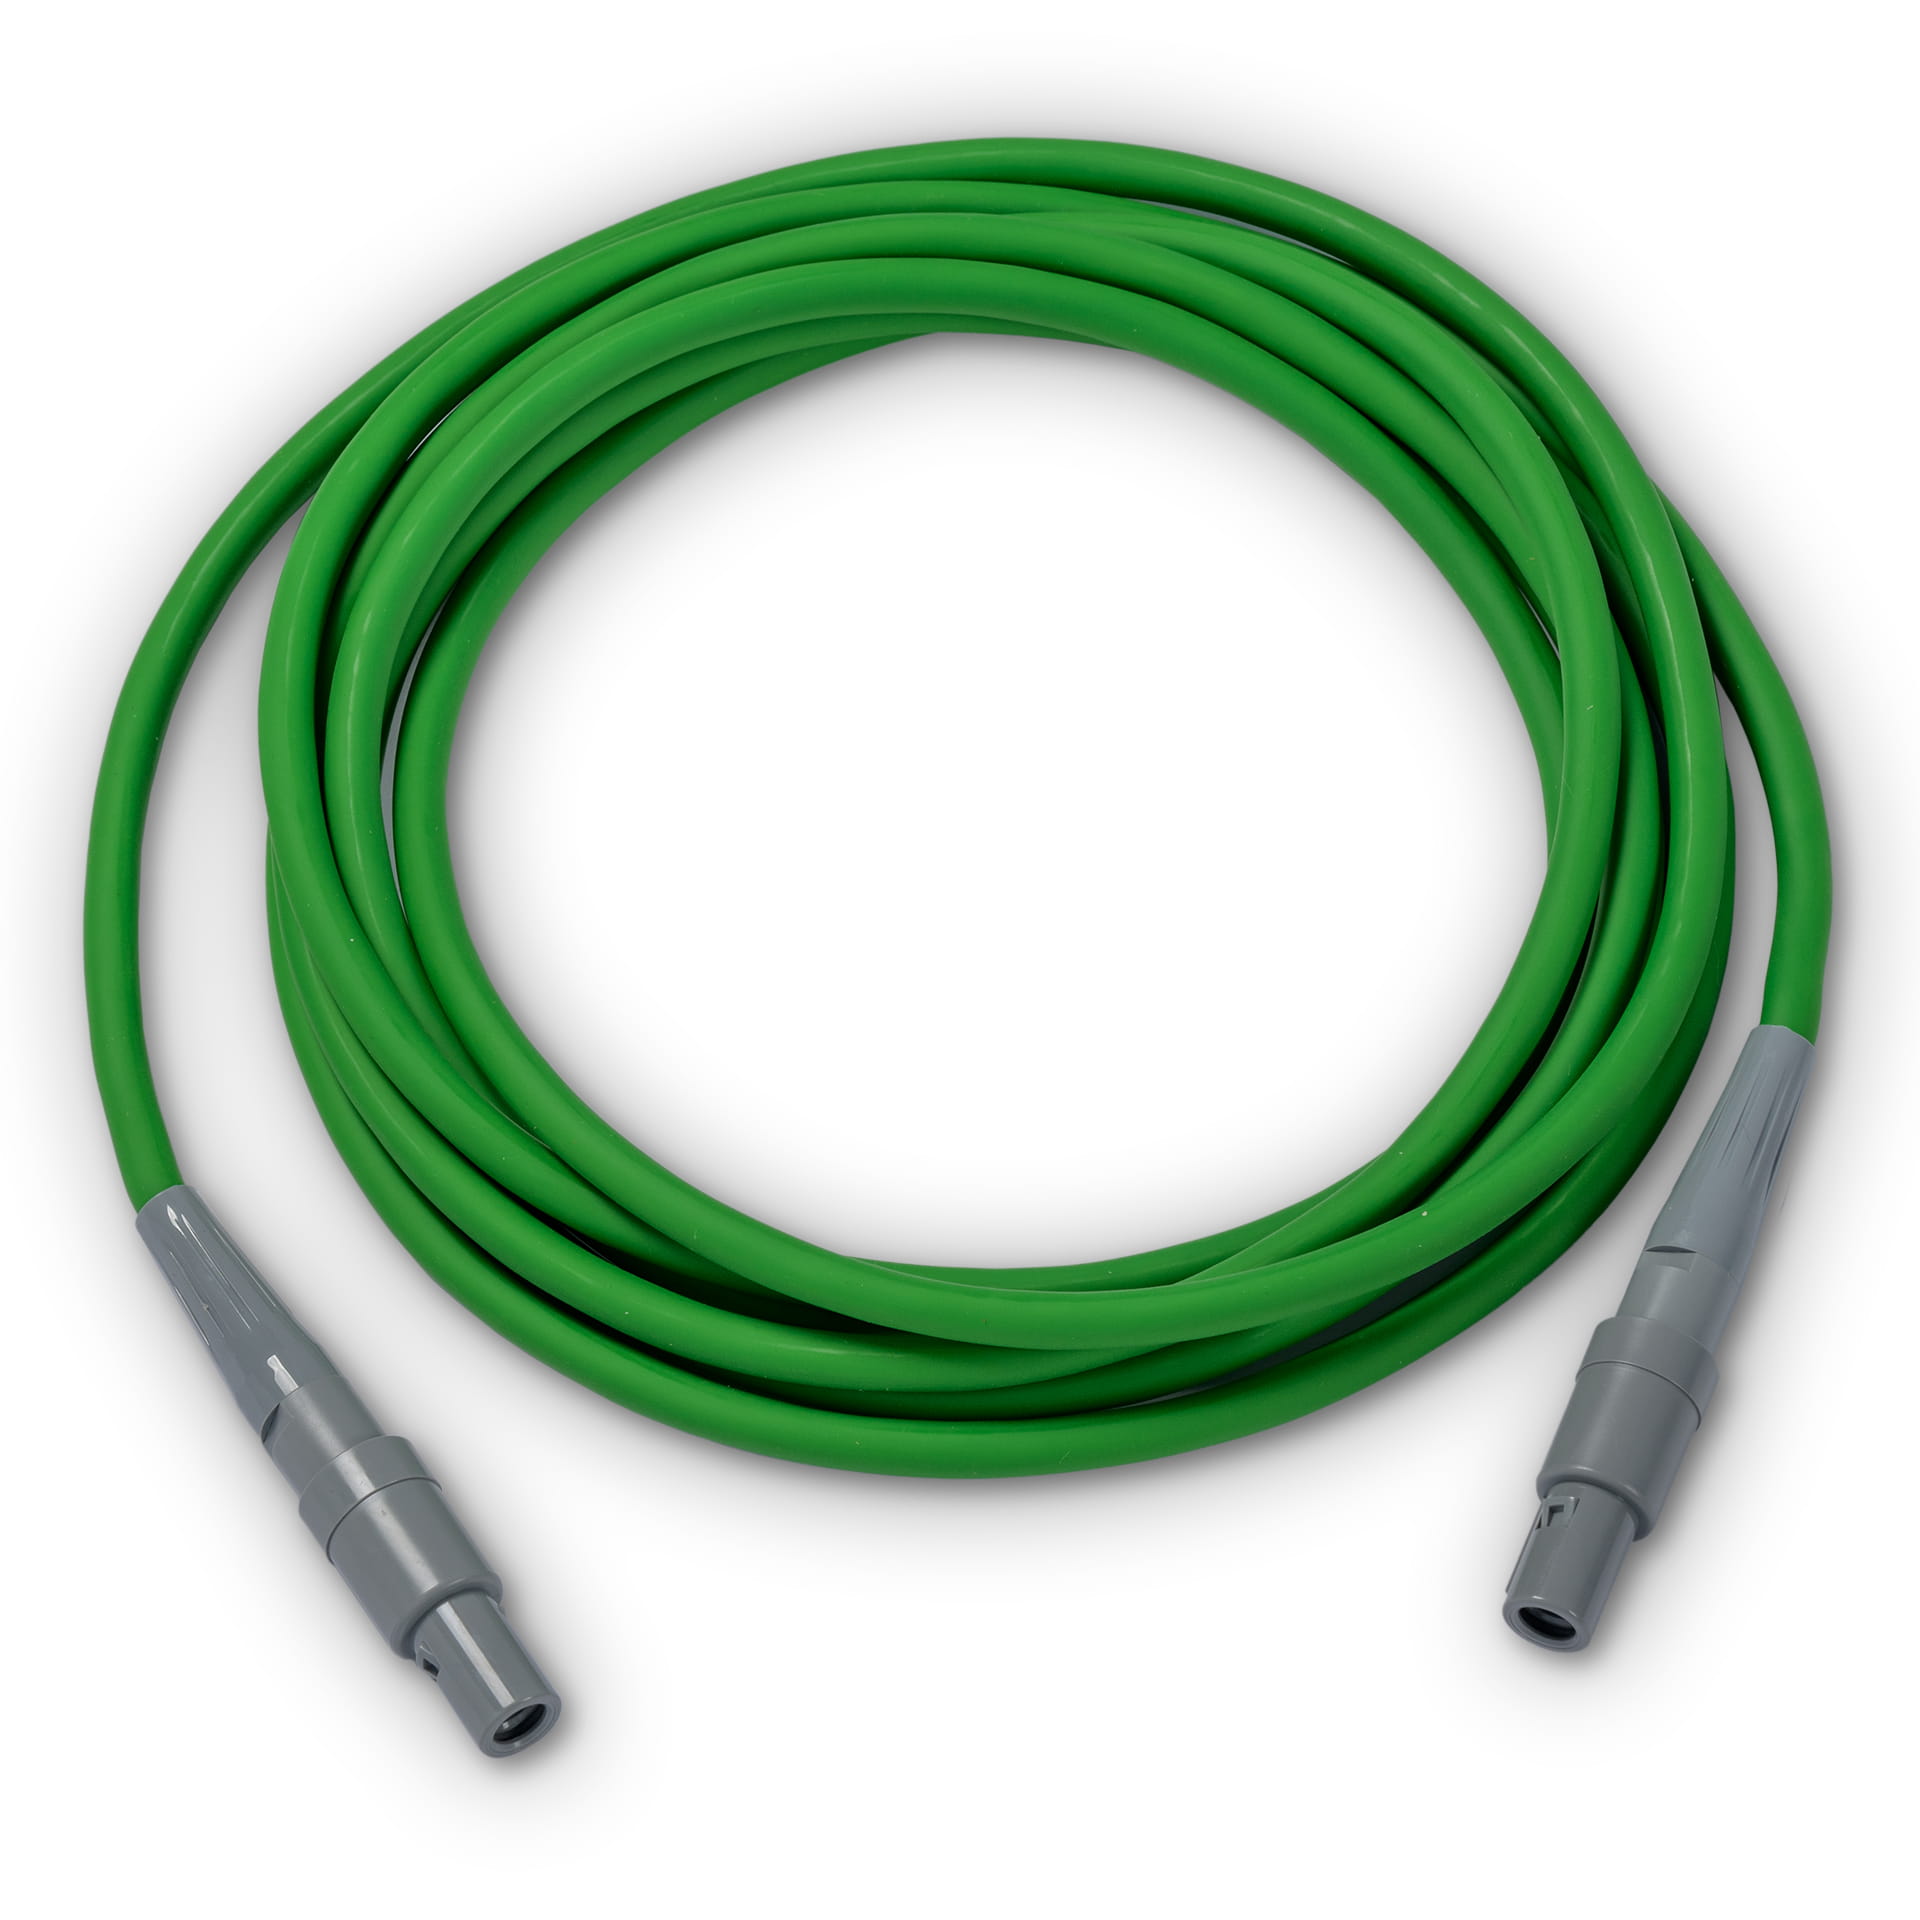 Kabel für Modulationsmatte (BICOM optima)